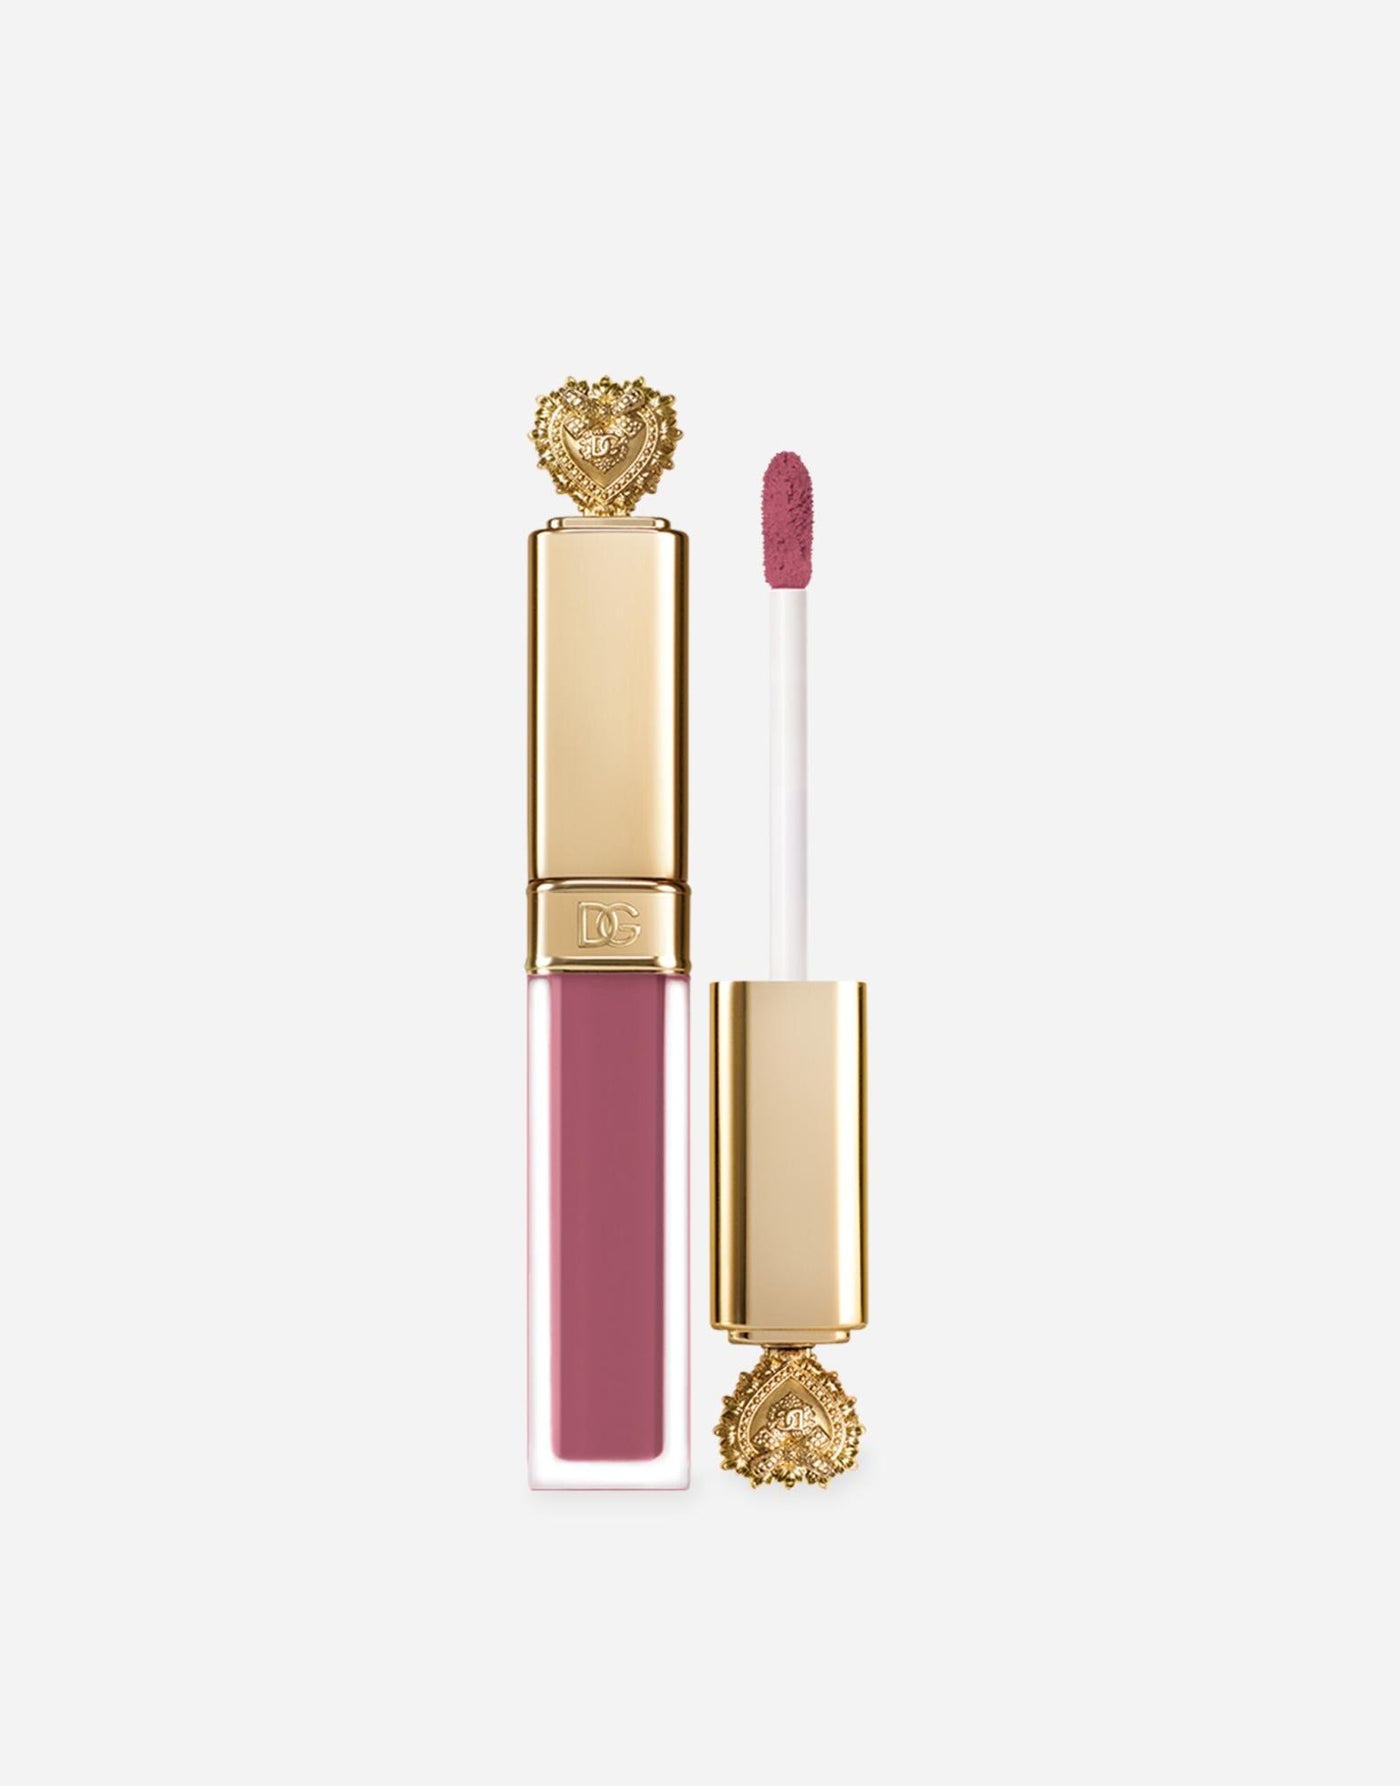 Dolce&amp;Gabbana Devotion Liquid Lipstick in Mousse 205 Affection